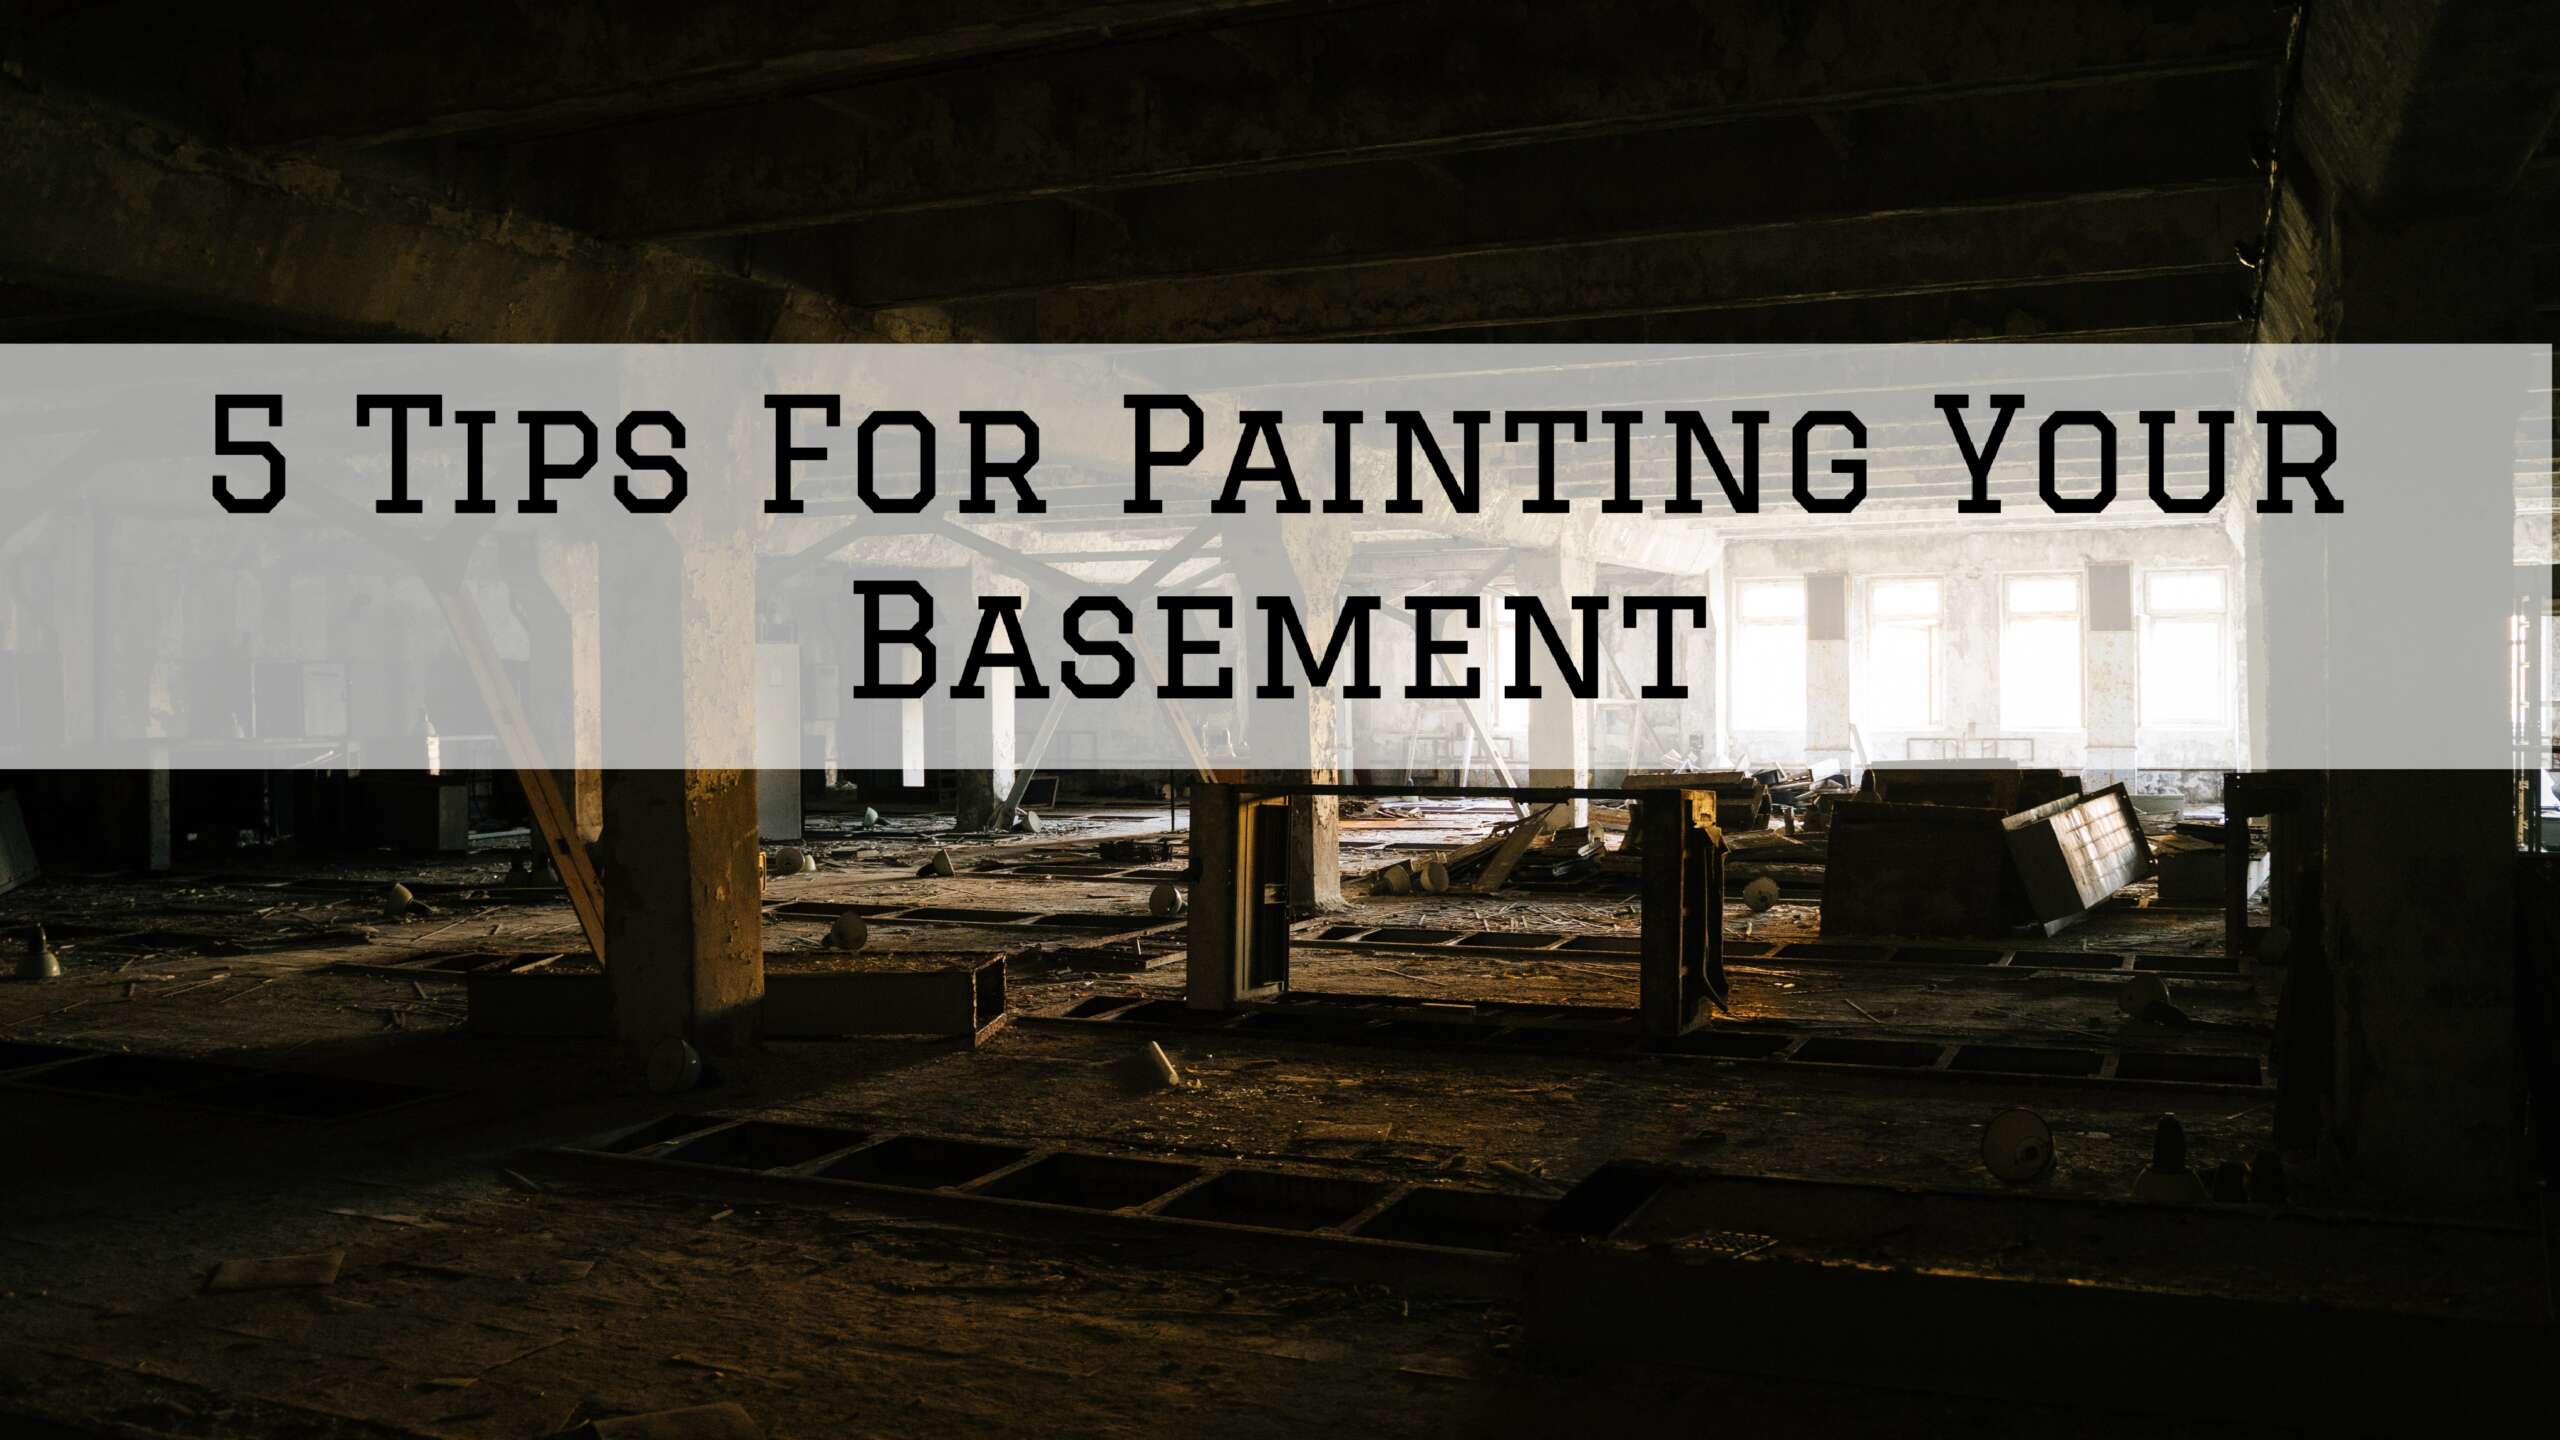 2020-12-11 Image Painting Inc Mclean VA Painting Basement Tips